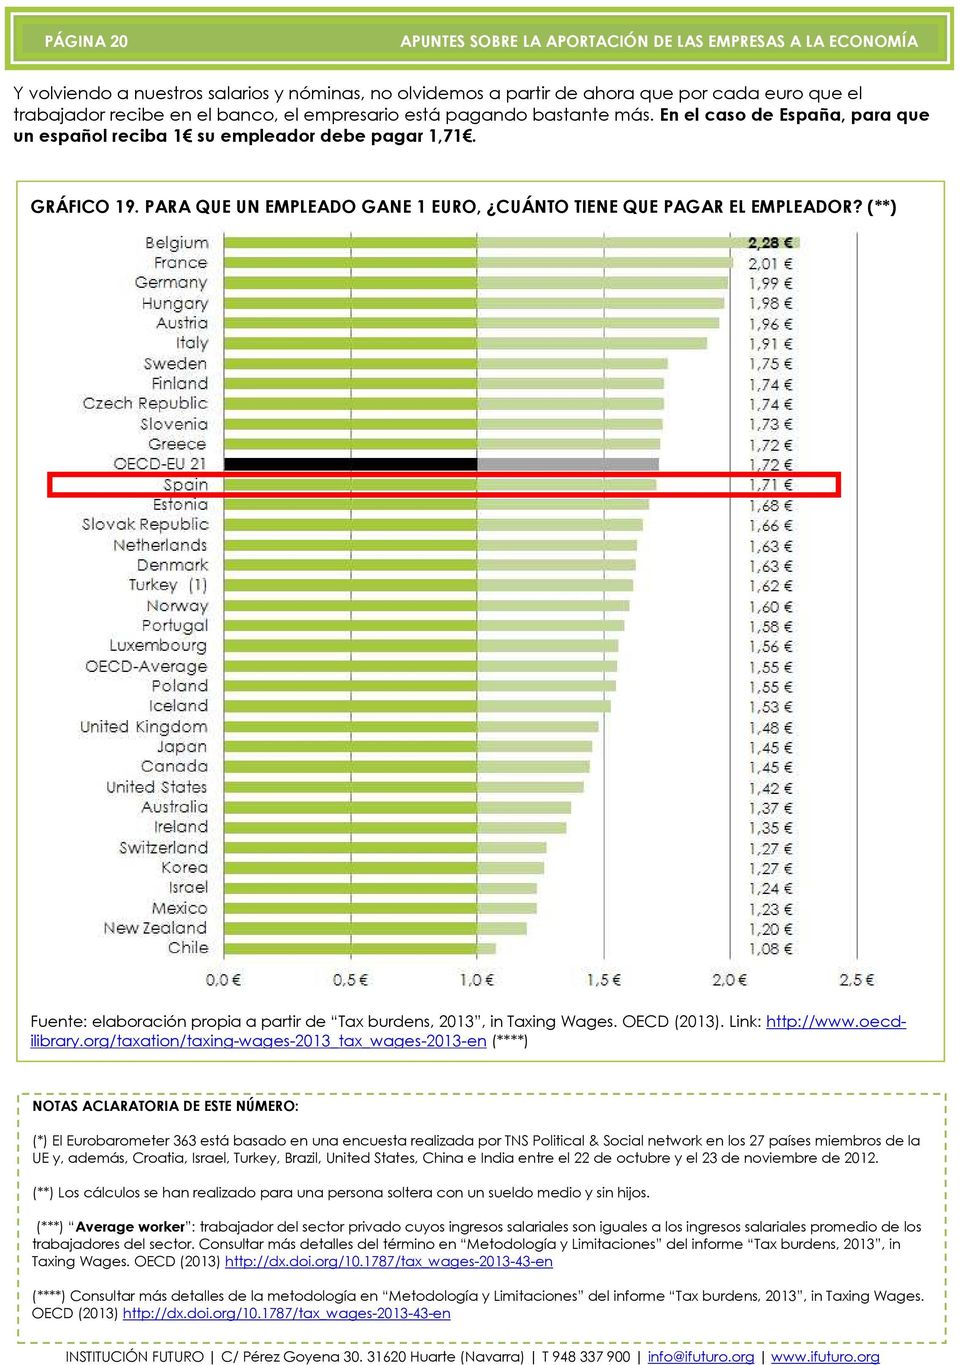 (**) Fuente: elaboración propia a partir de Tax burdens, 2013, in Taxing Wages. OECD (2013). Link: http://www.oecdilibrary.